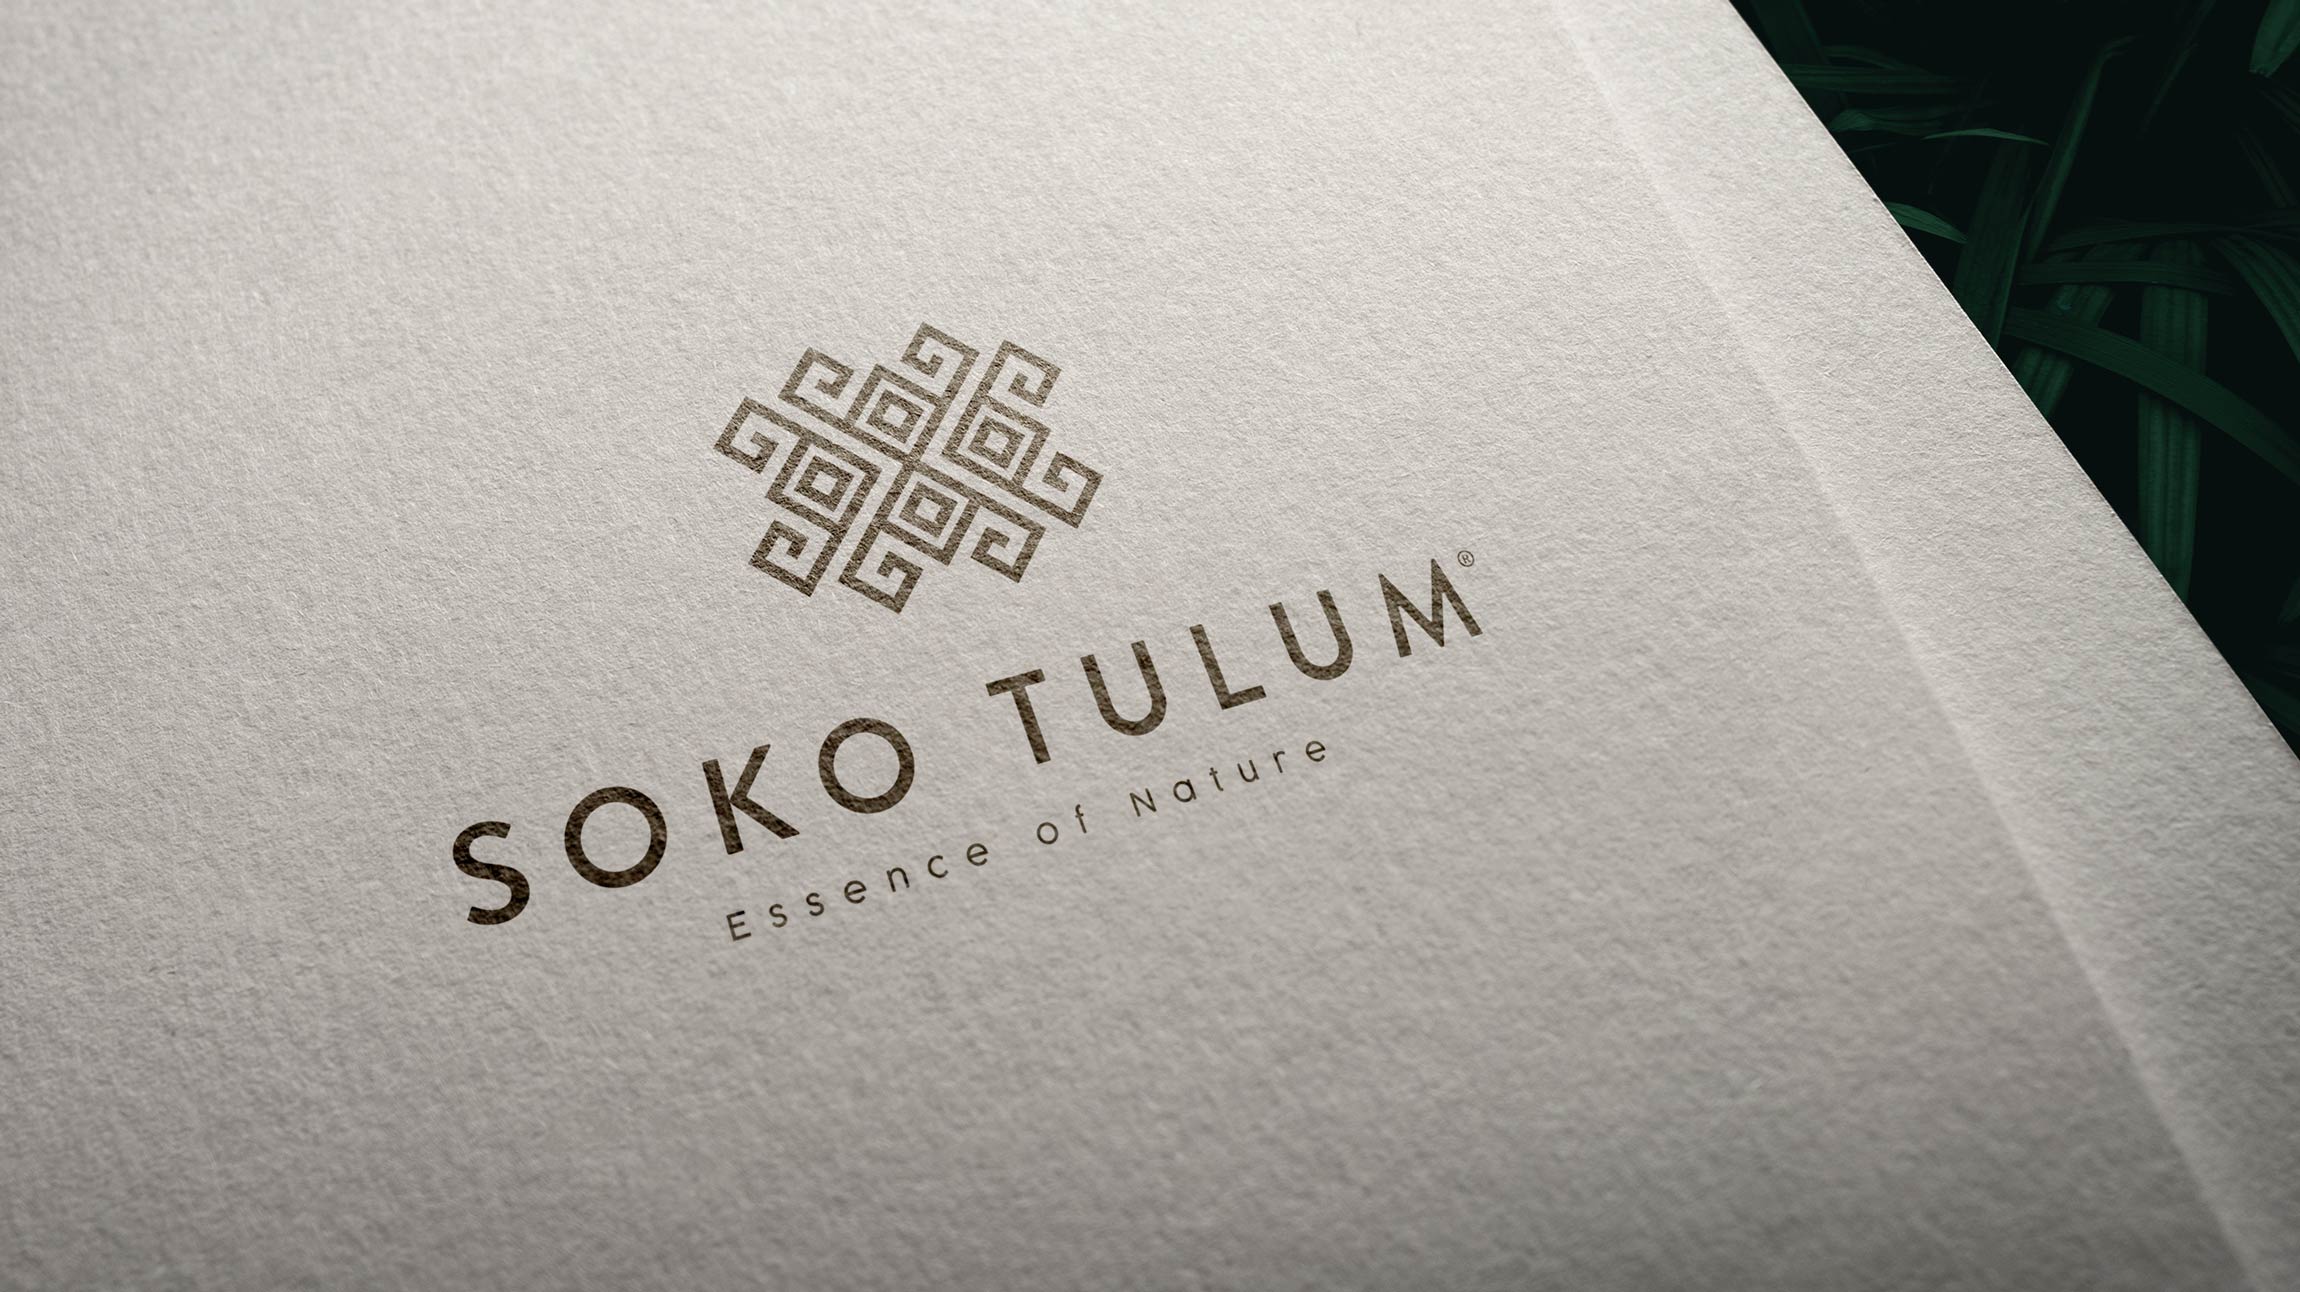 Mockup logo Soko Tulum / Essence of Nature